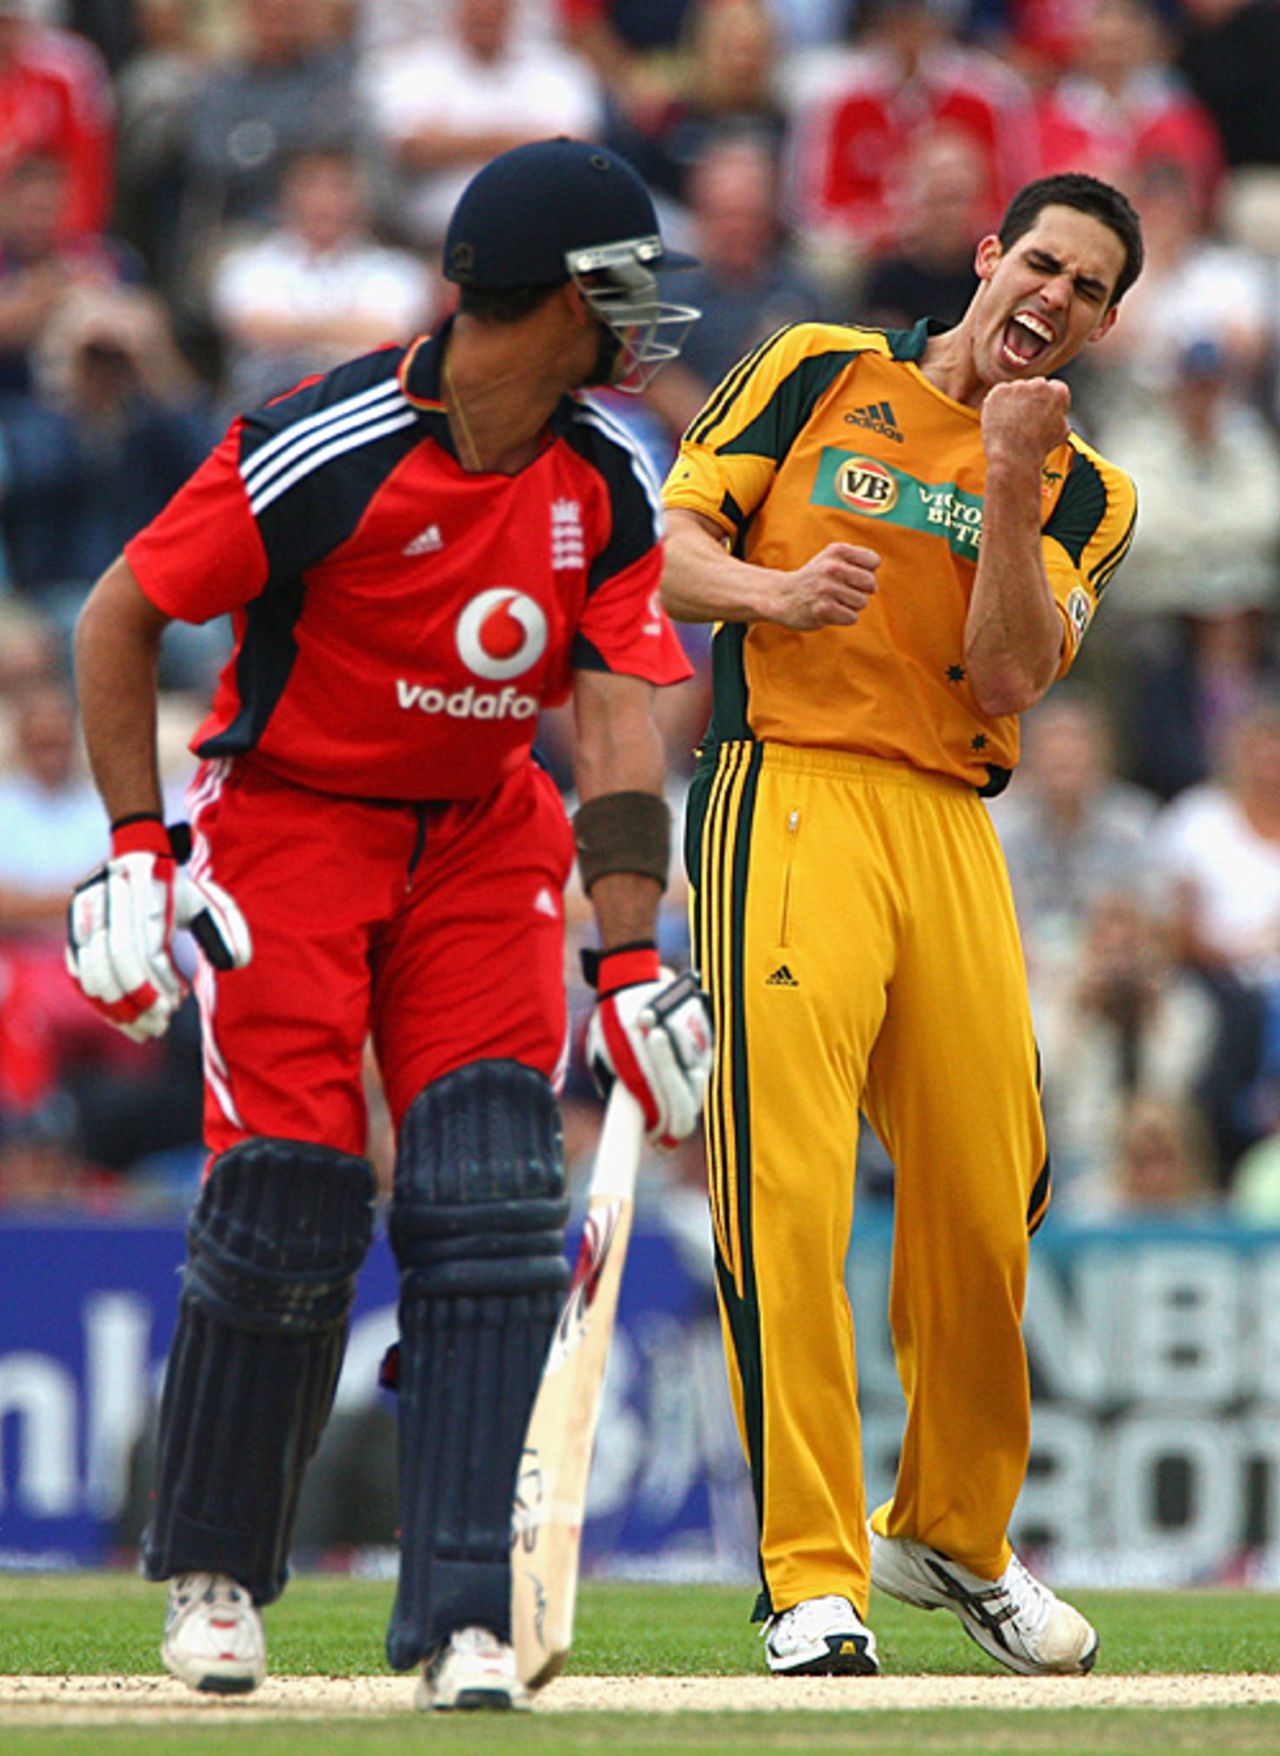 Mitchell Johnson is ecstatic after dismissing Owais Shah, England v Australia, 3rd ODI, Southampton, September 9, 2009